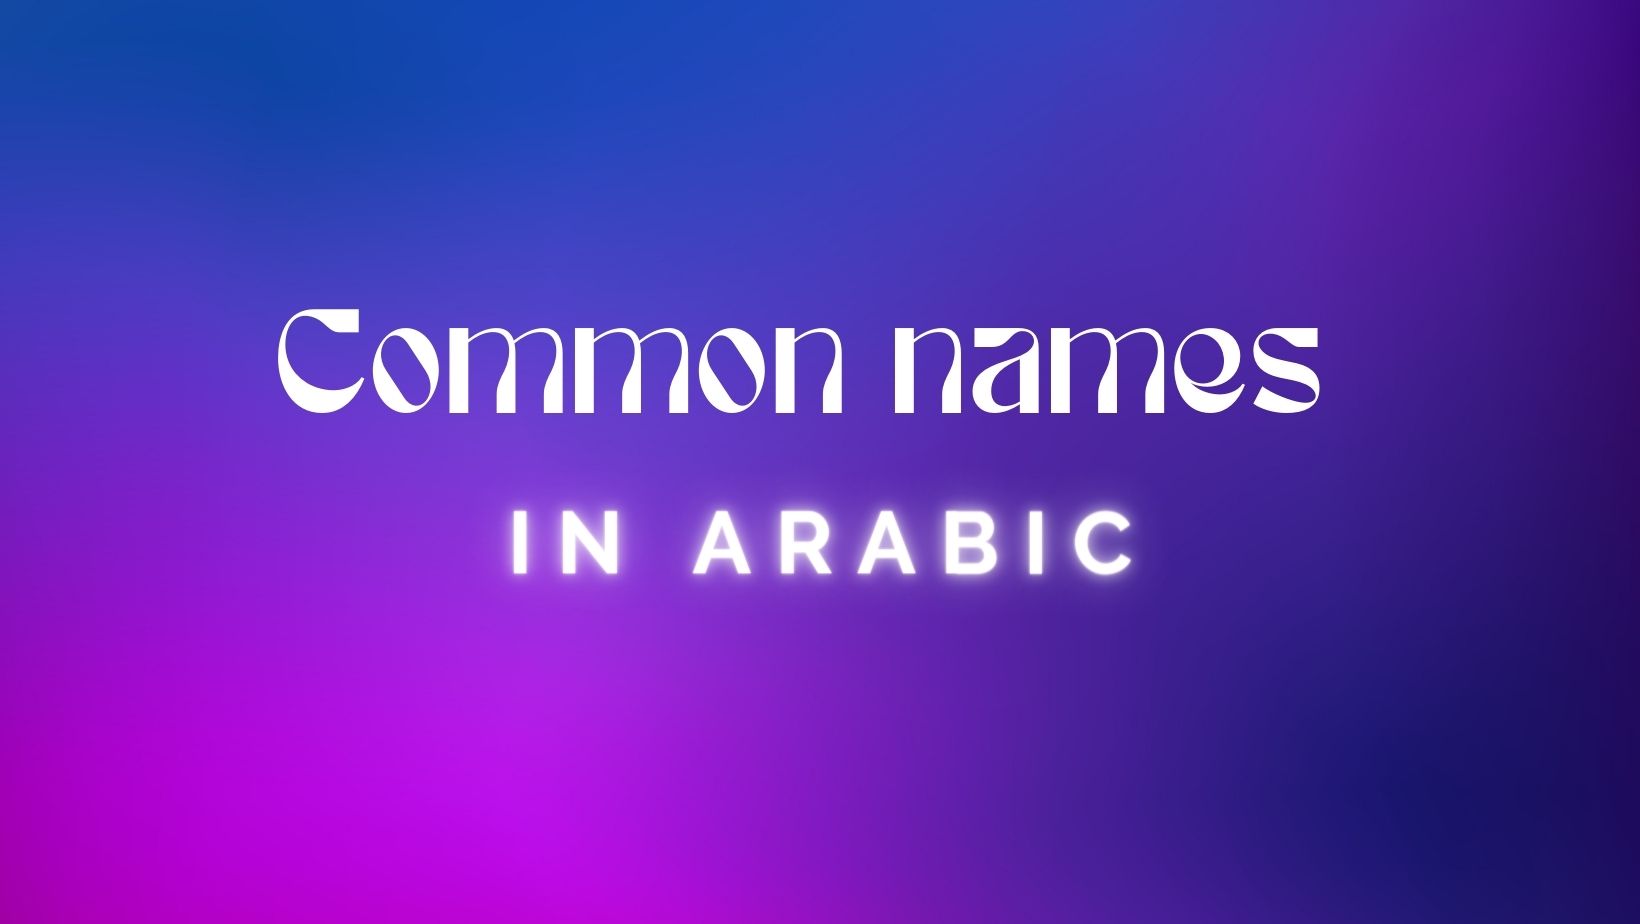 Common names in Arabic language